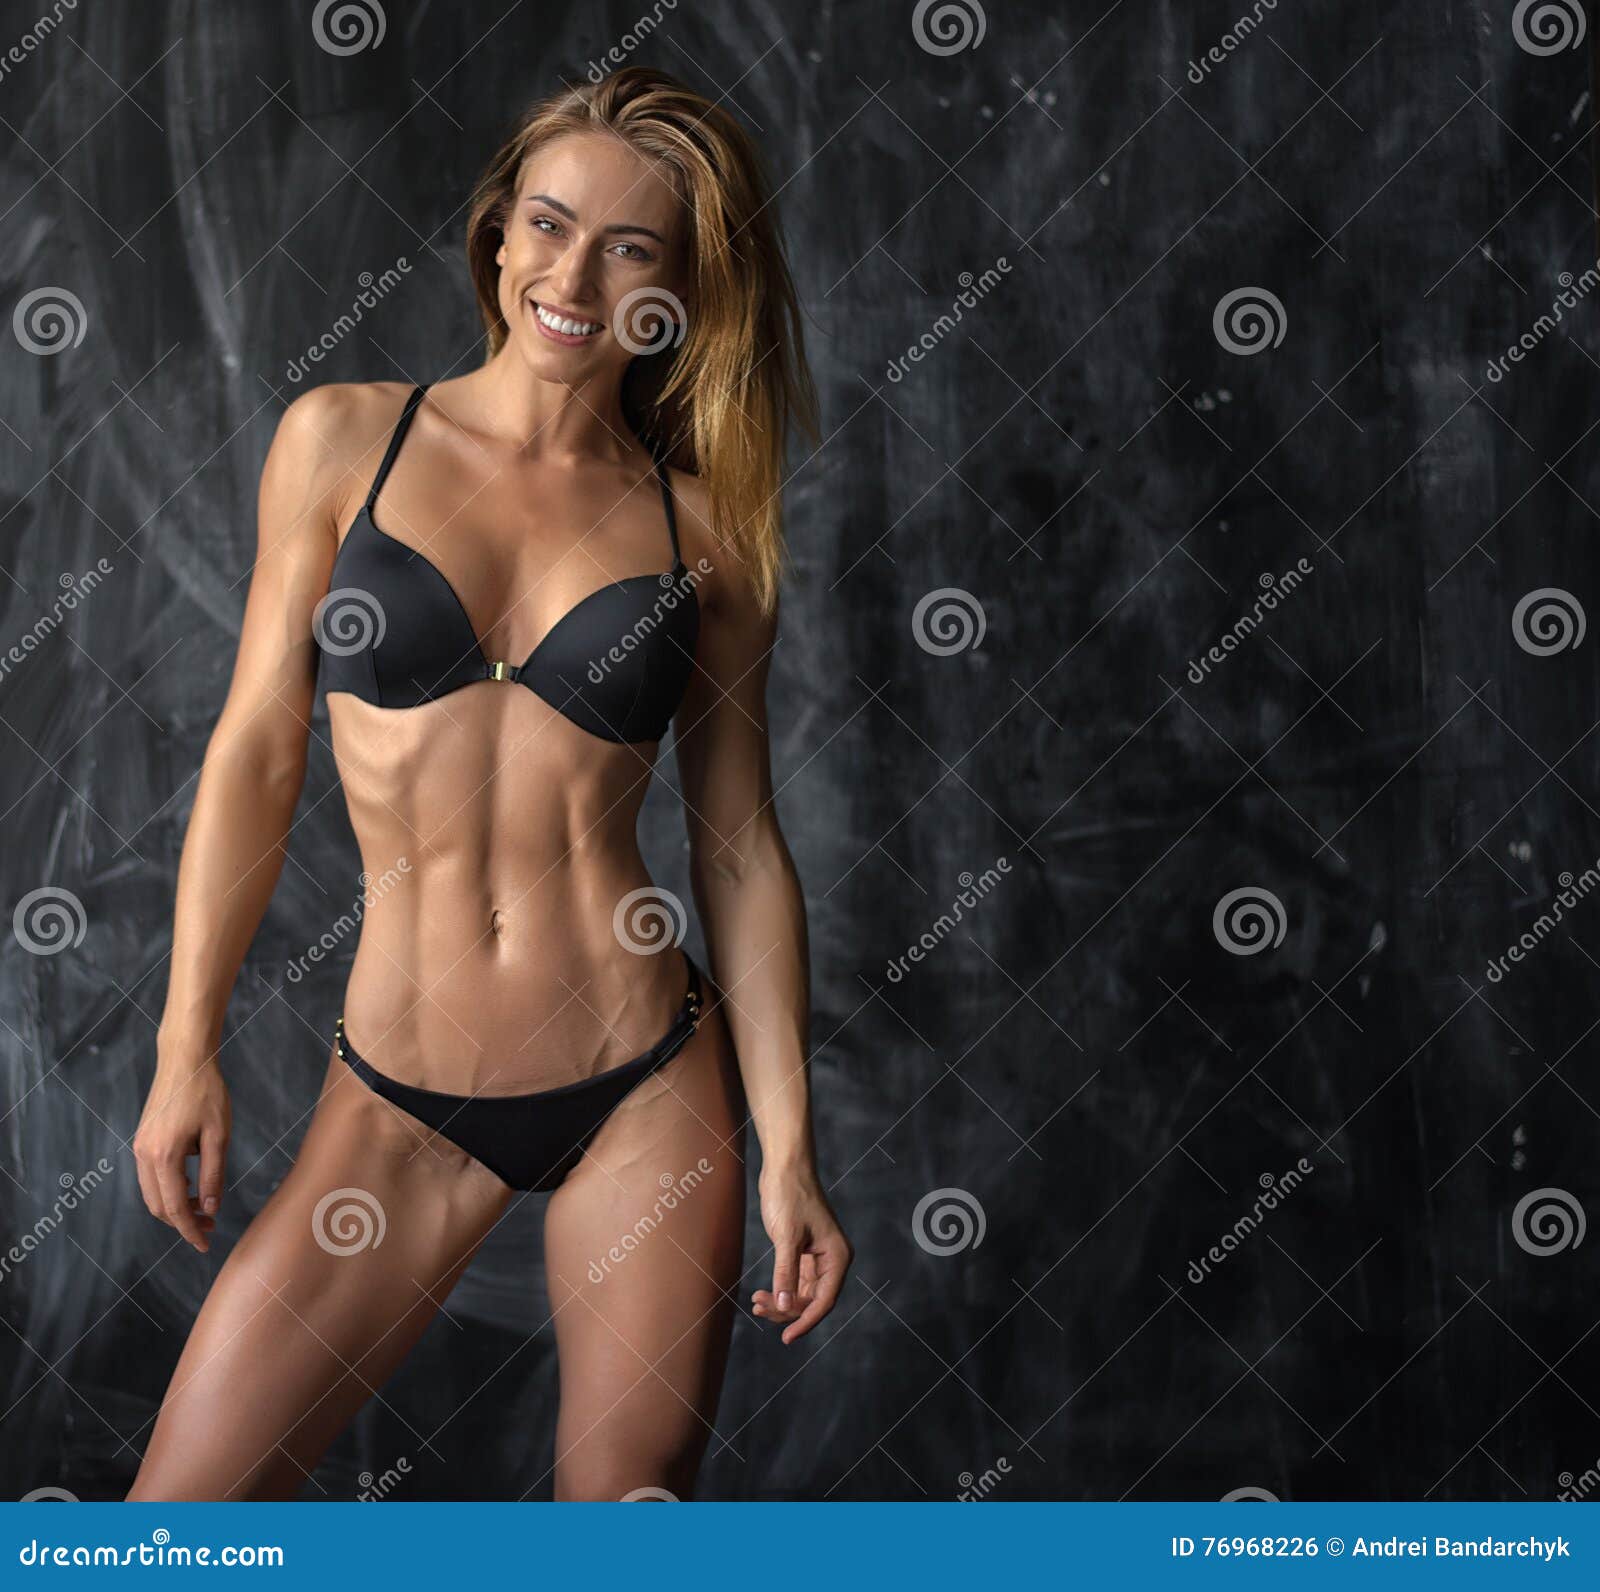 https://thumbs.dreamstime.com/z/beautiful-young-athletic-girl-underwear-dark-background-spanish-looks-76968226.jpg